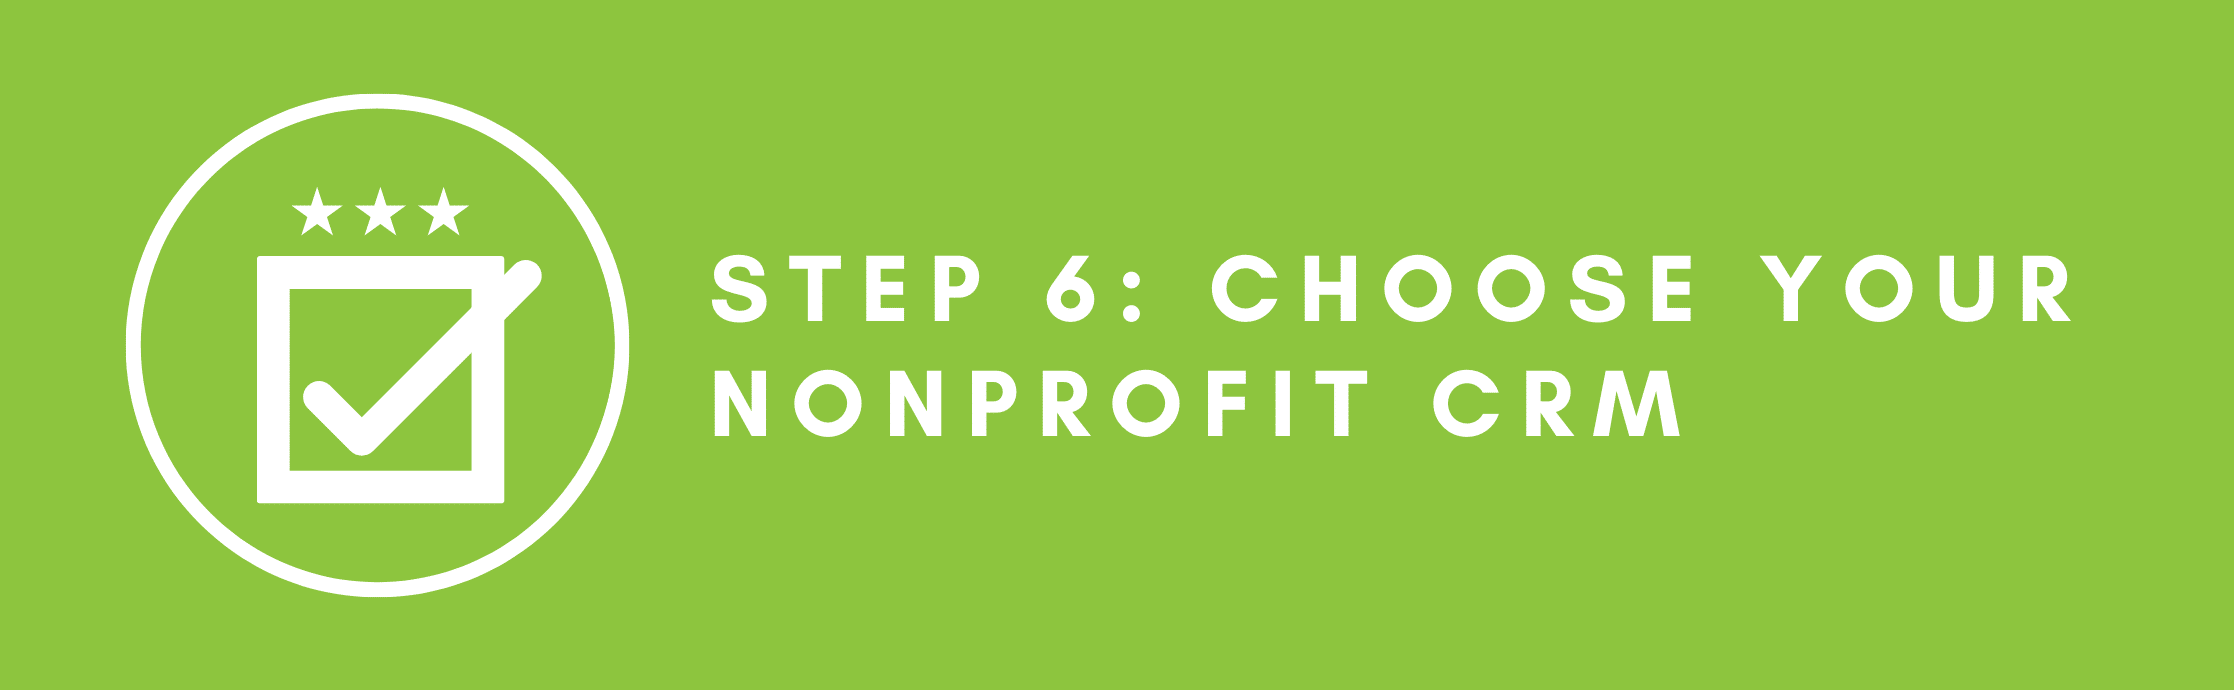 choosing-nonprofit-crm-software-step-6